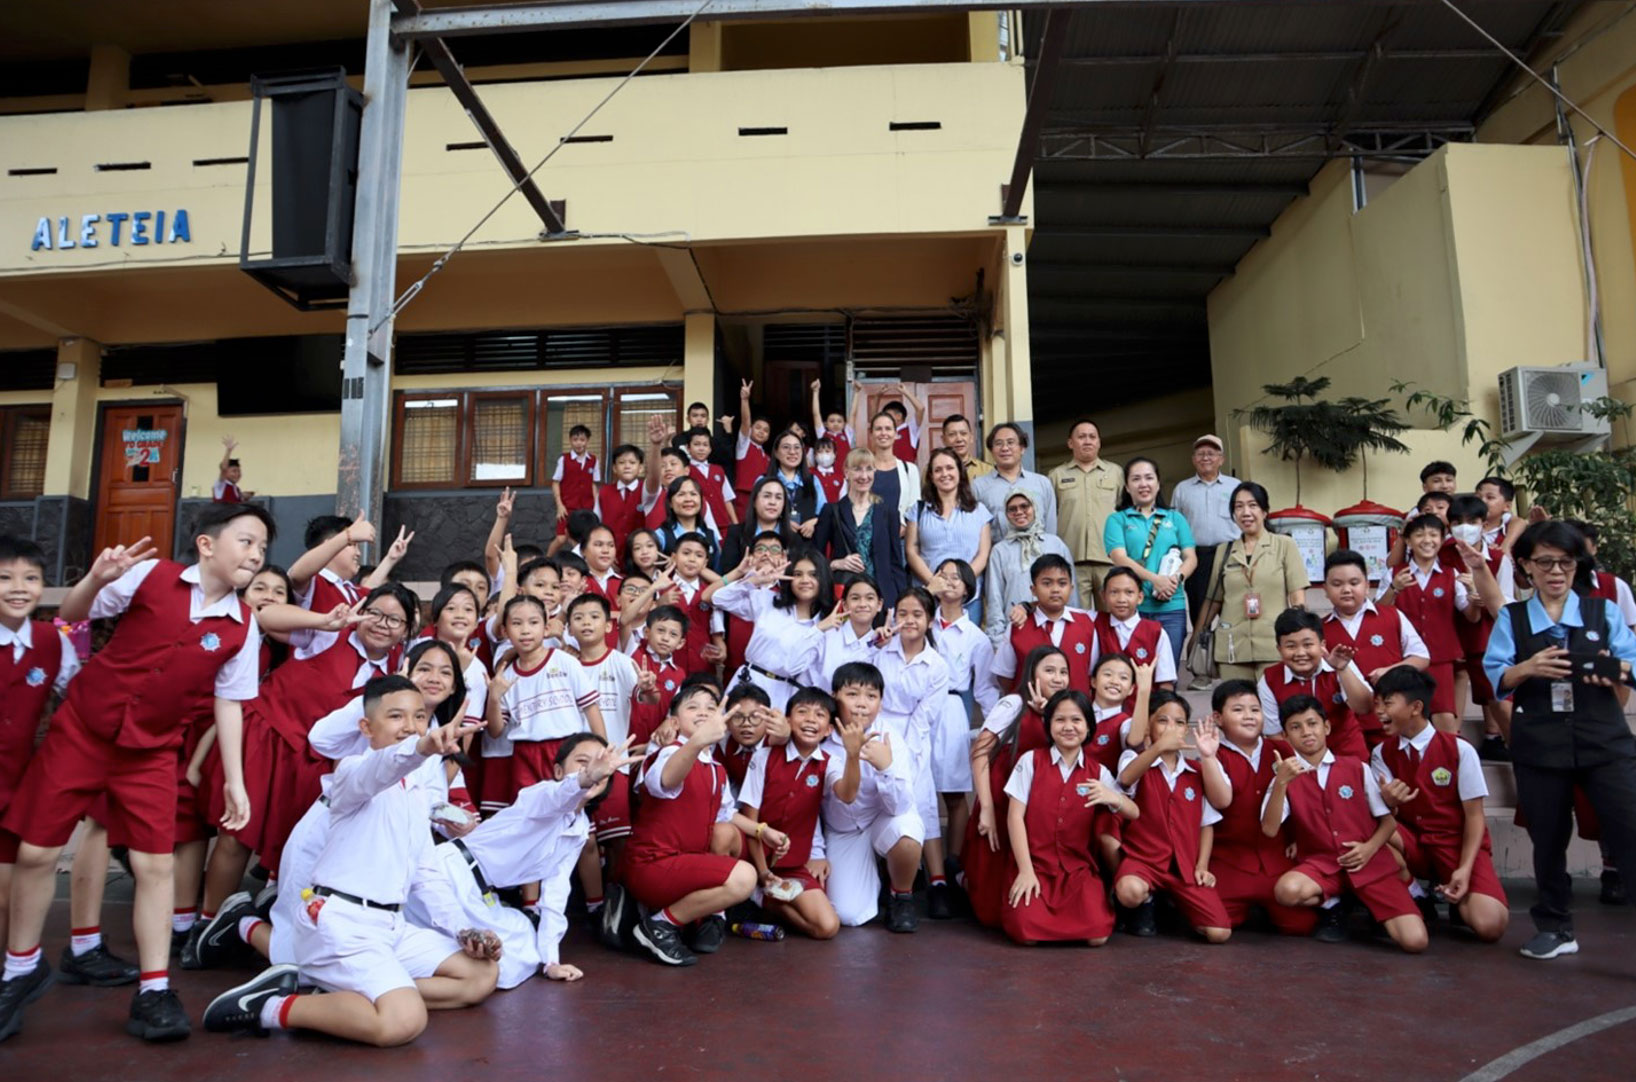 German Ambassador to Indonesia, ASEAN & Timor-Leste, Ina Lepel’s visit to the Eben Heizer school in Manado